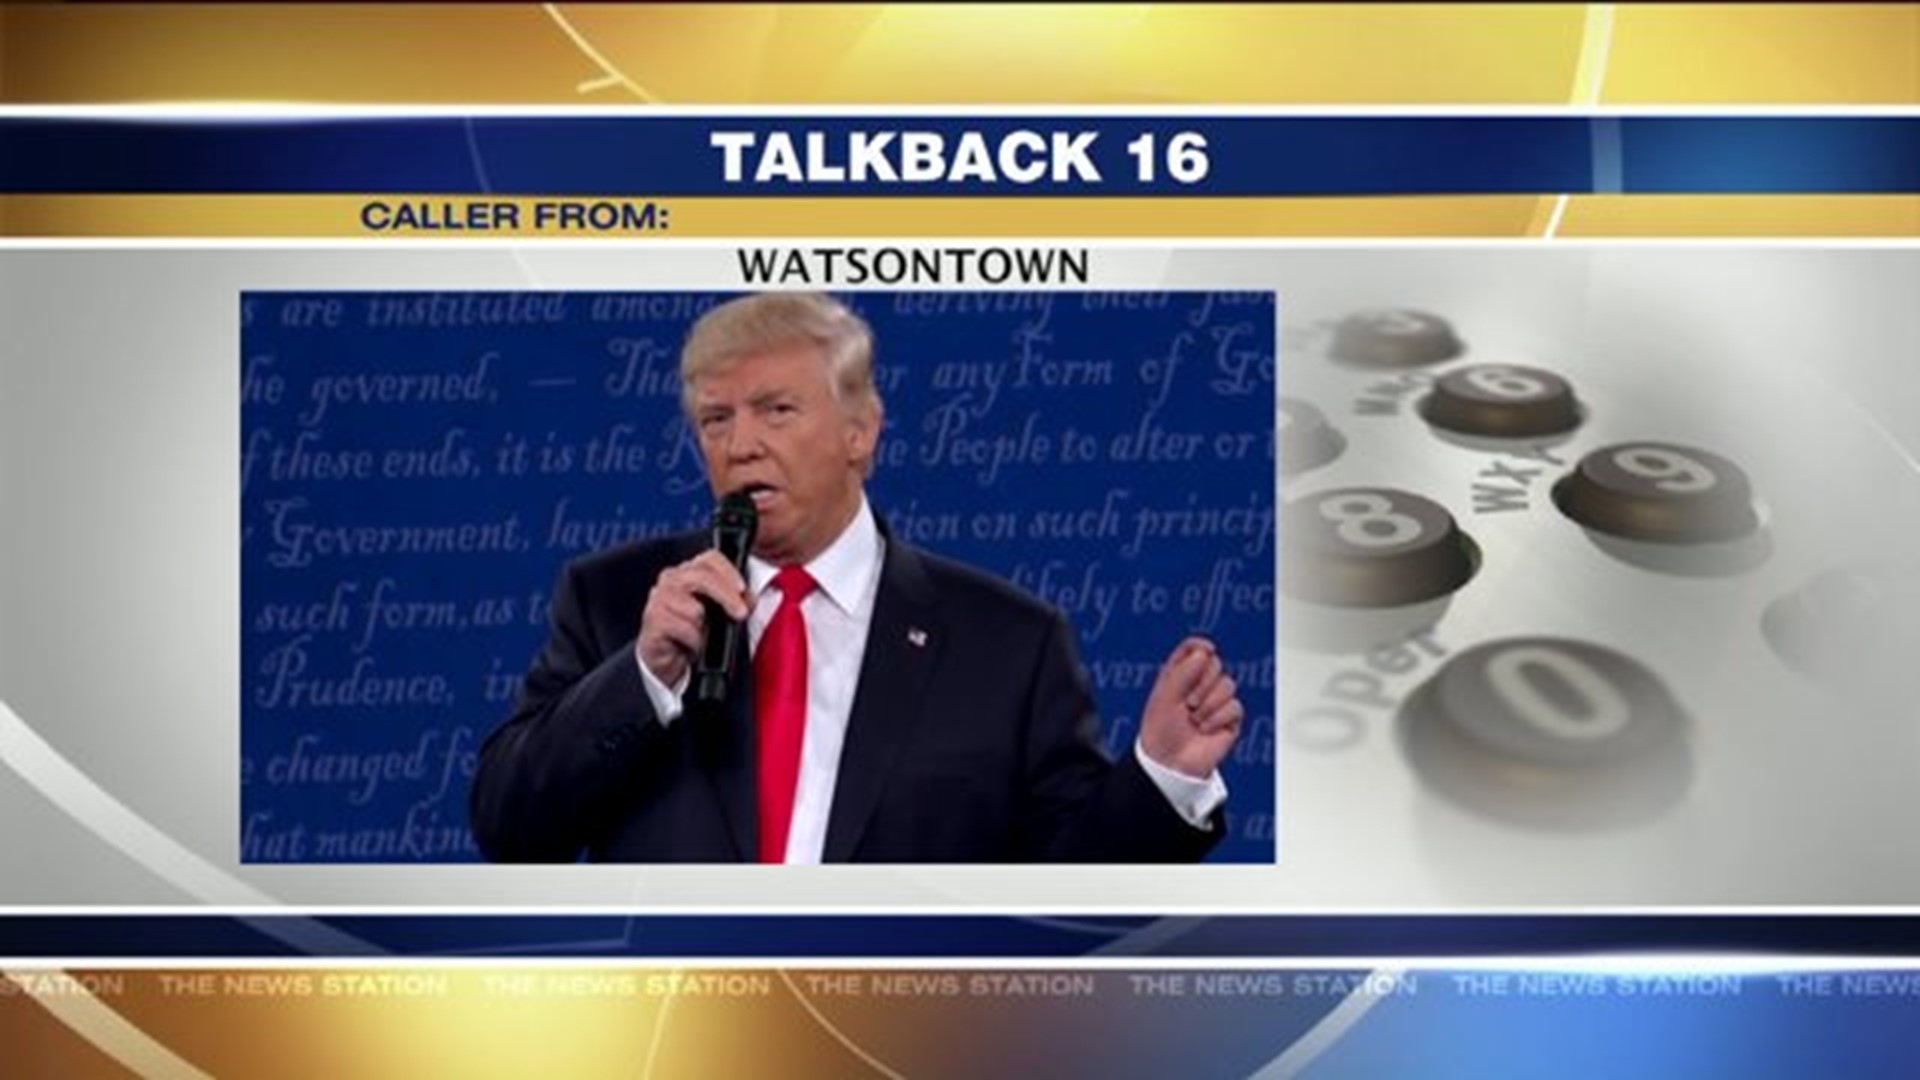 Talkback 16: Fired Up over Presidential Race